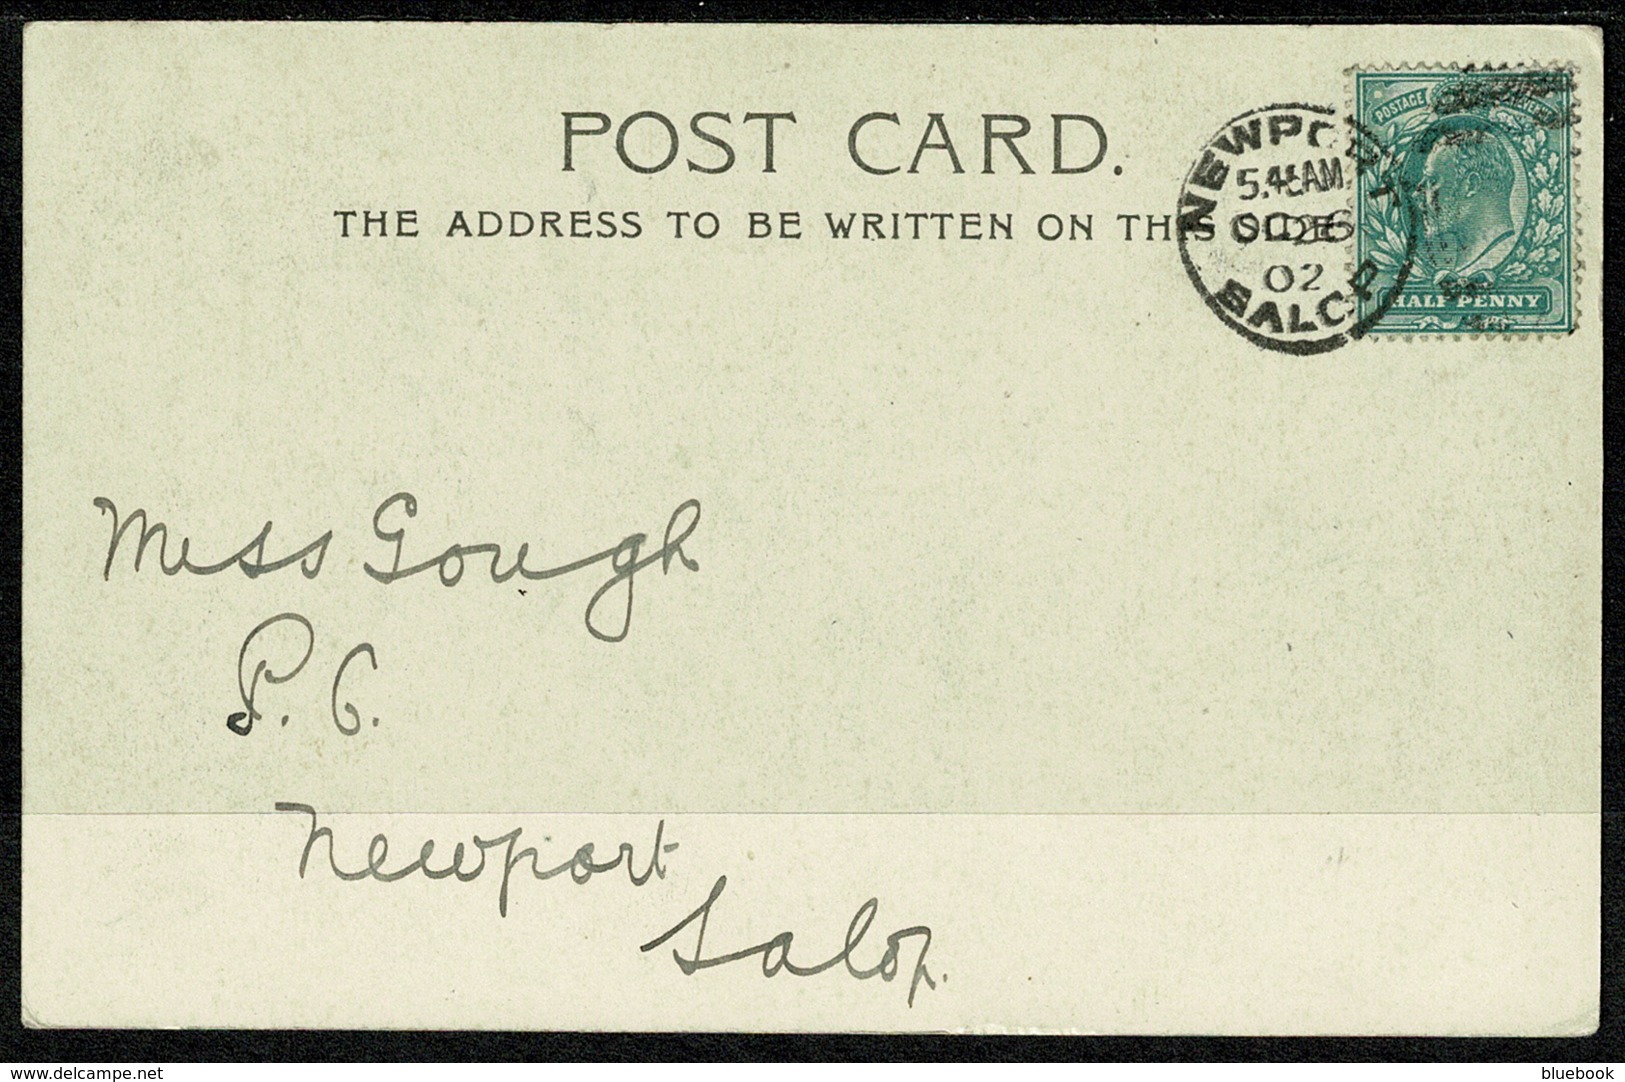 Ref 1276 - 1902 Postcard - Pass Of Aberglaslynh - Caernarvonshire Wales - Newport Salop Duplex Cancel - Caernarvonshire